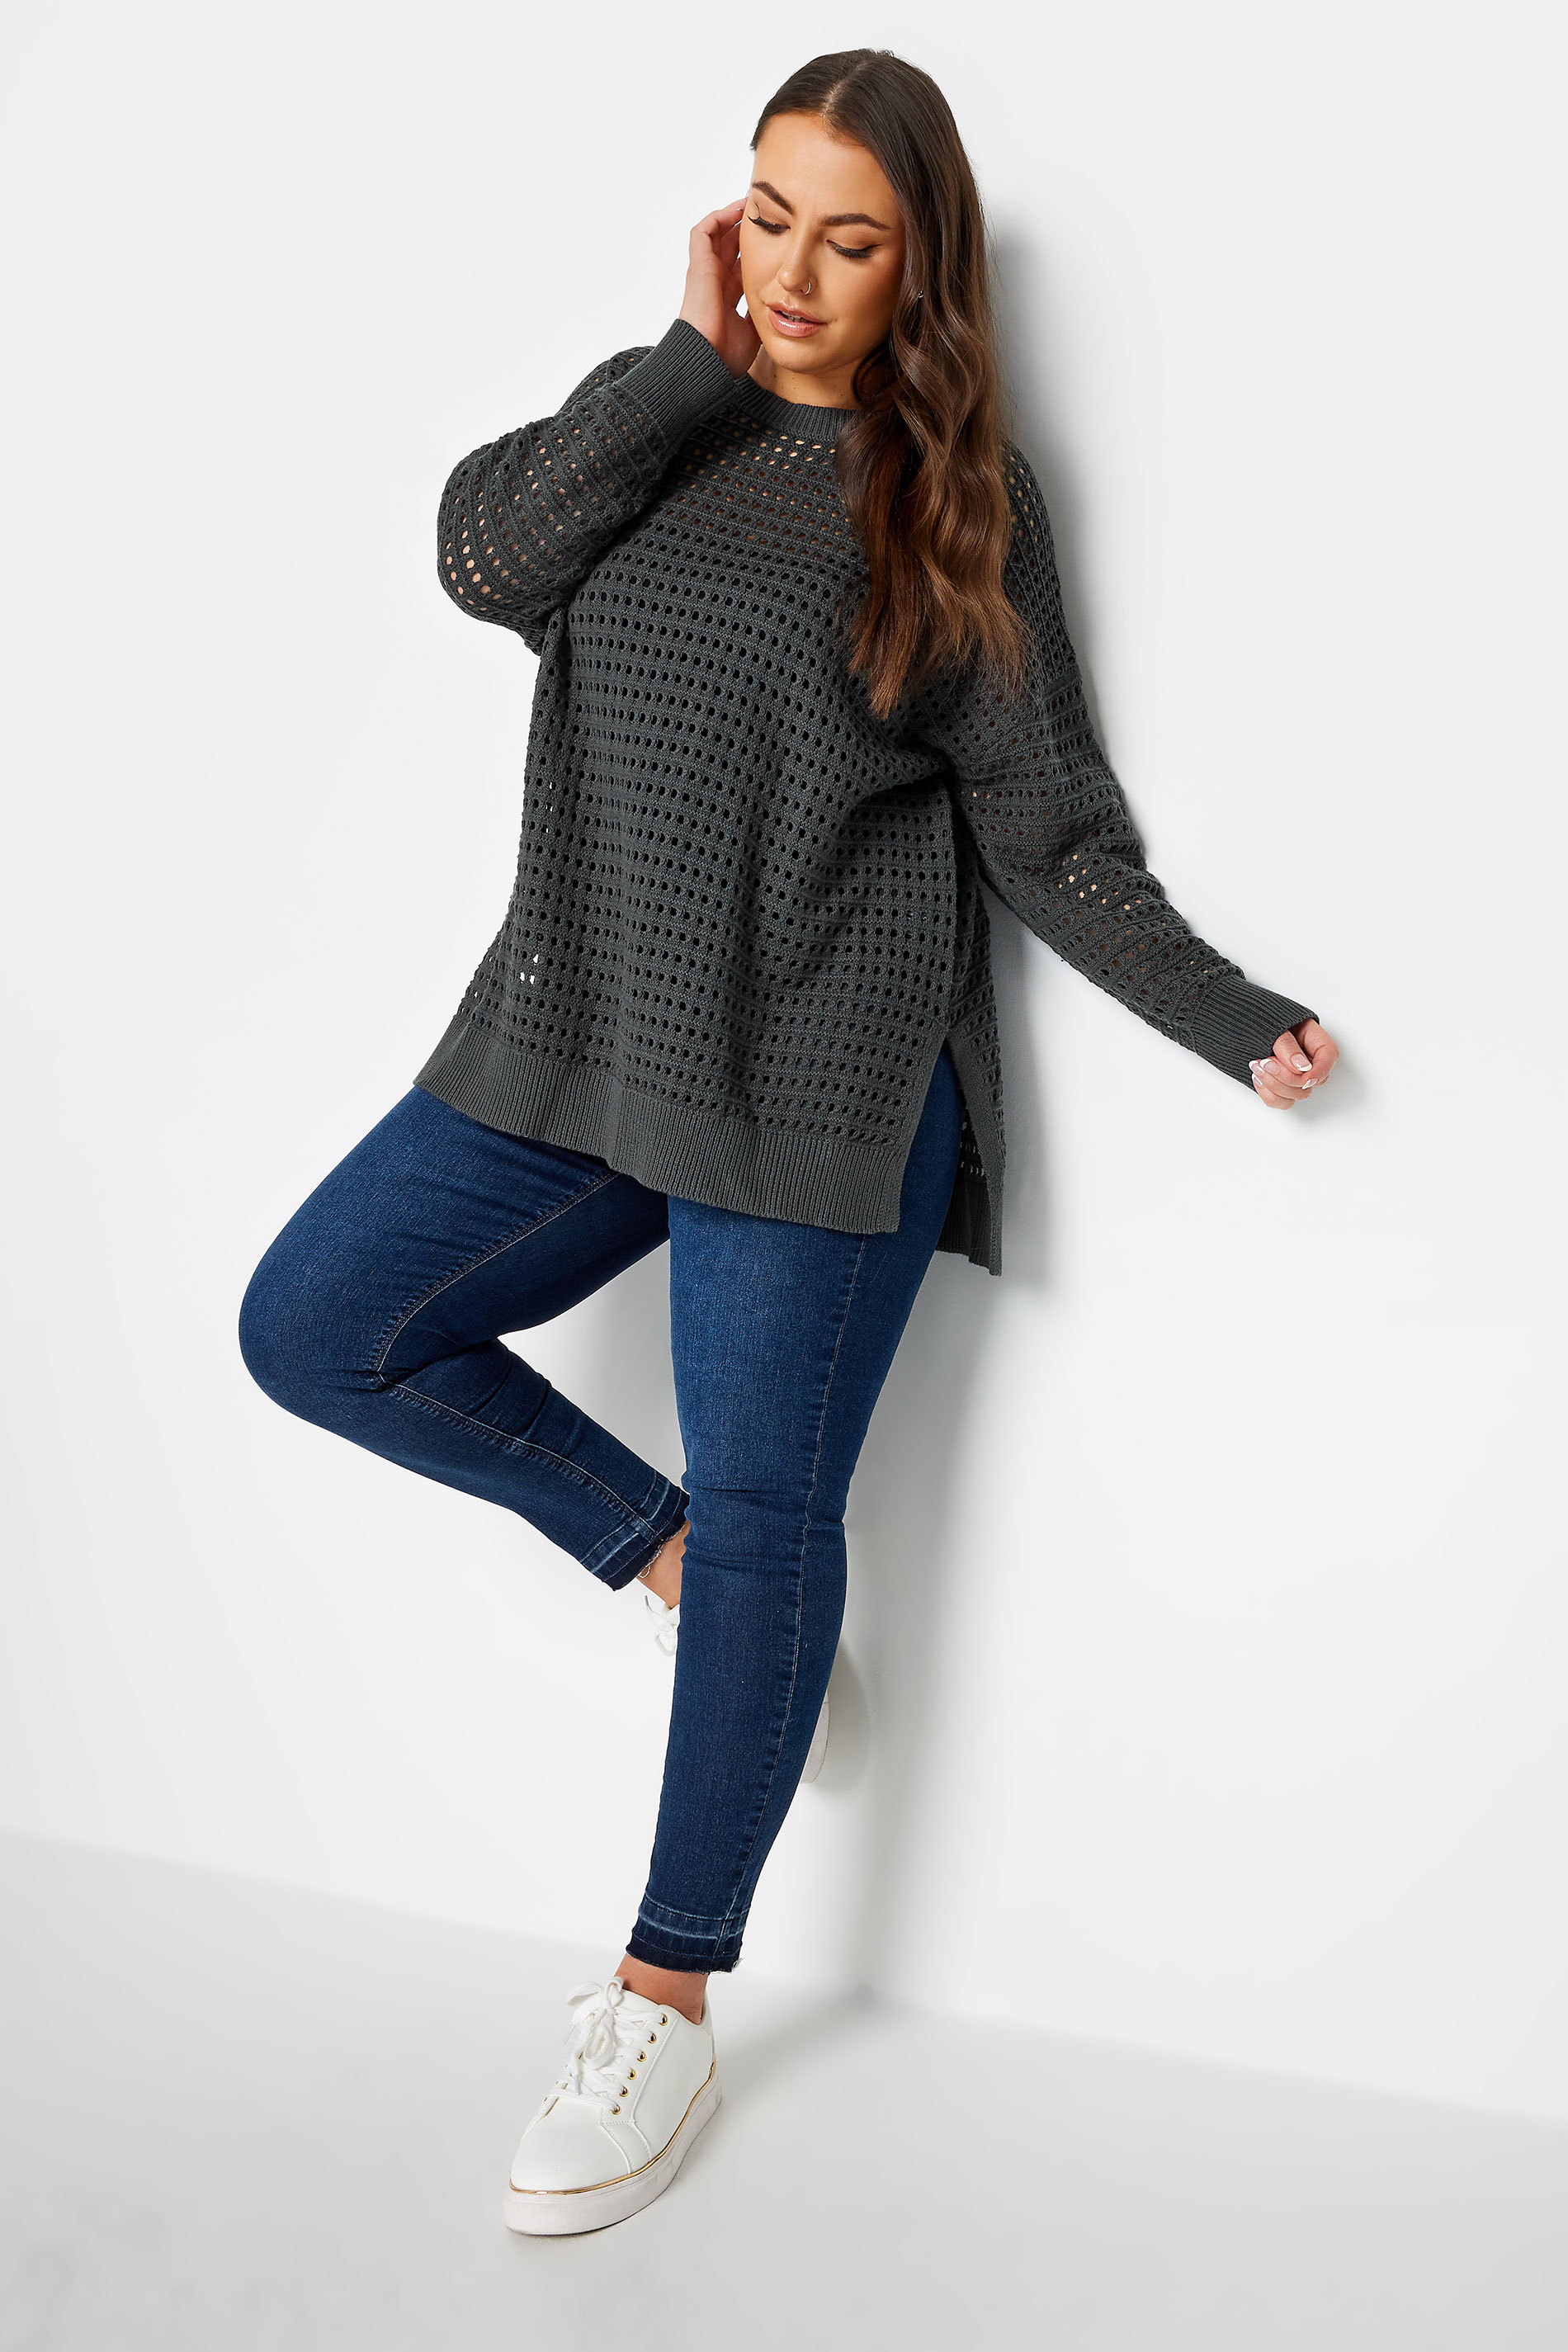 YOURS Plus Size Slate Grey Side Split Crochet Jumper | Yours Clothing 2